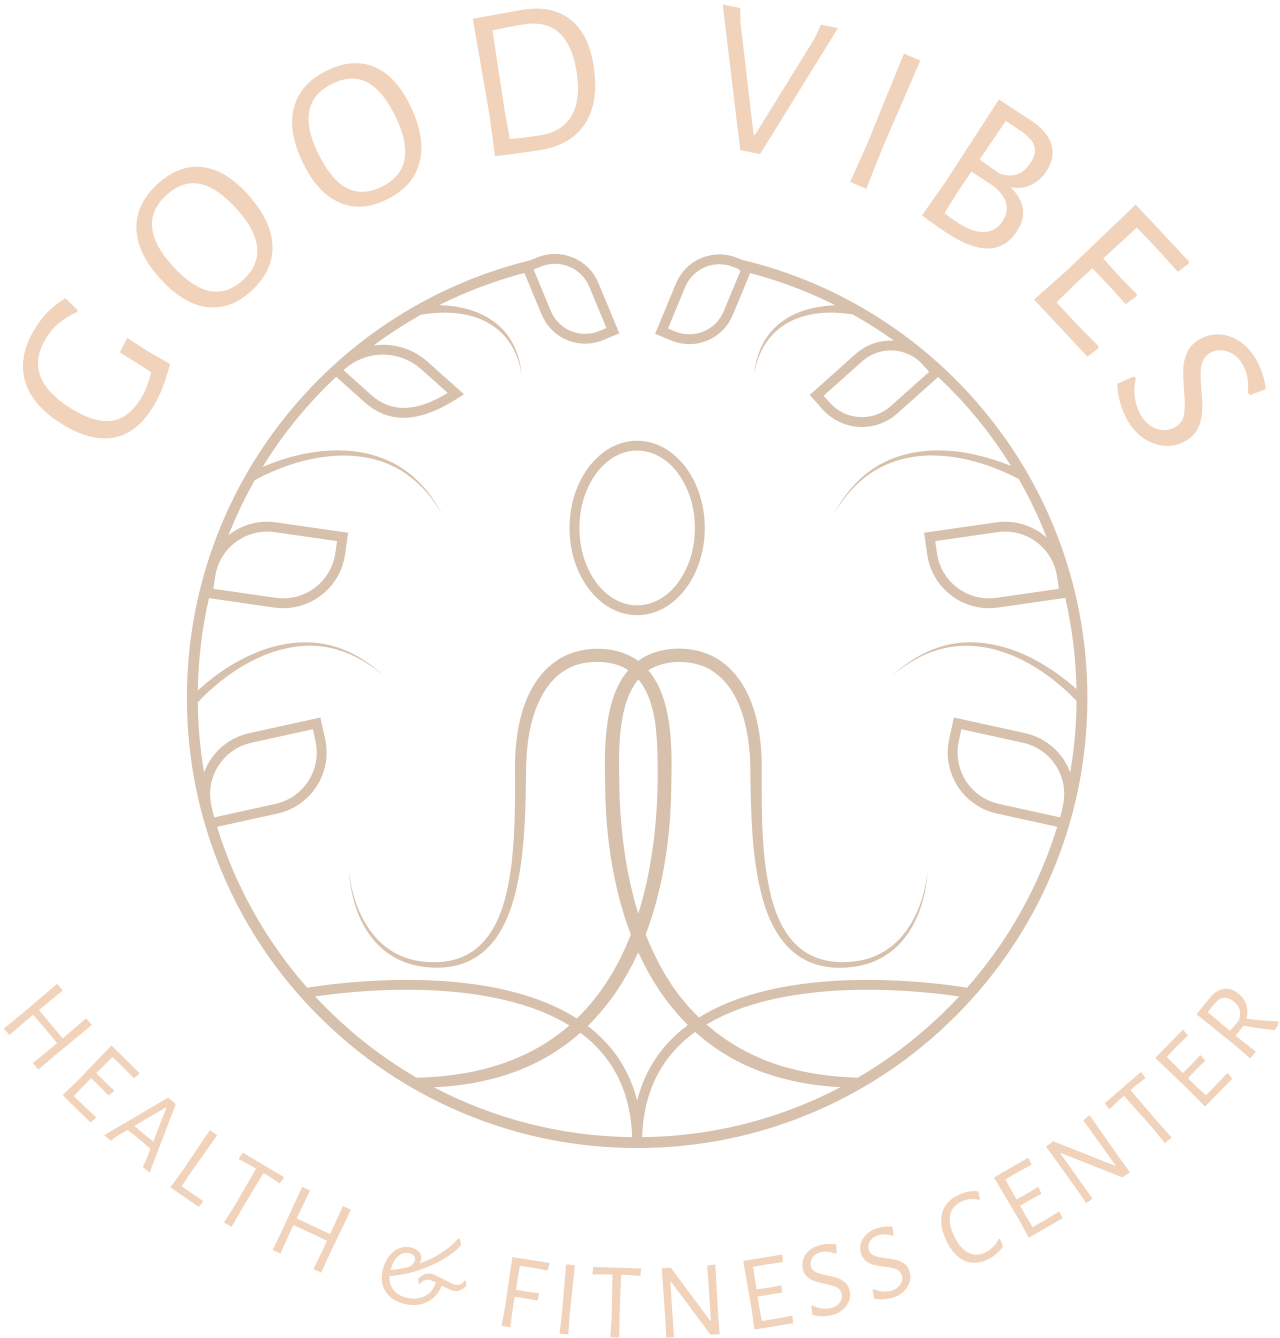 GOOD VIBES's logo